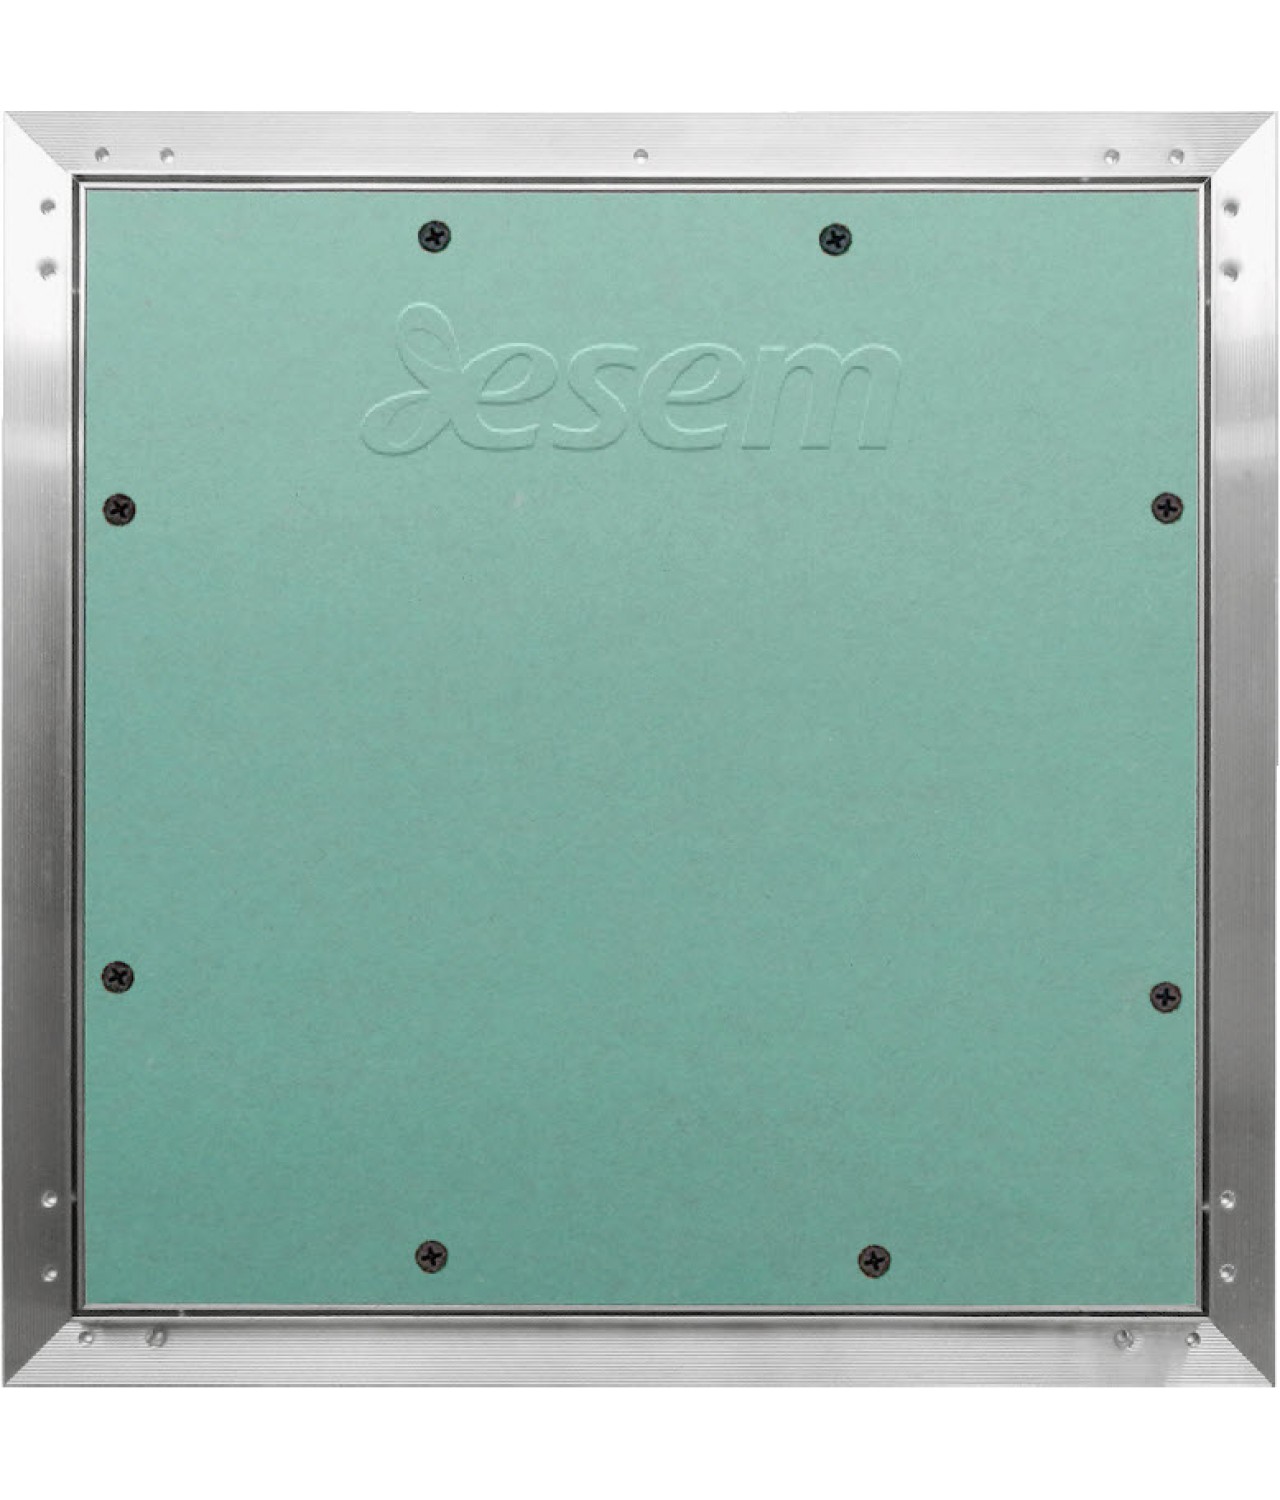 AluEco Flex - access panels with surrounding rubber lip seal